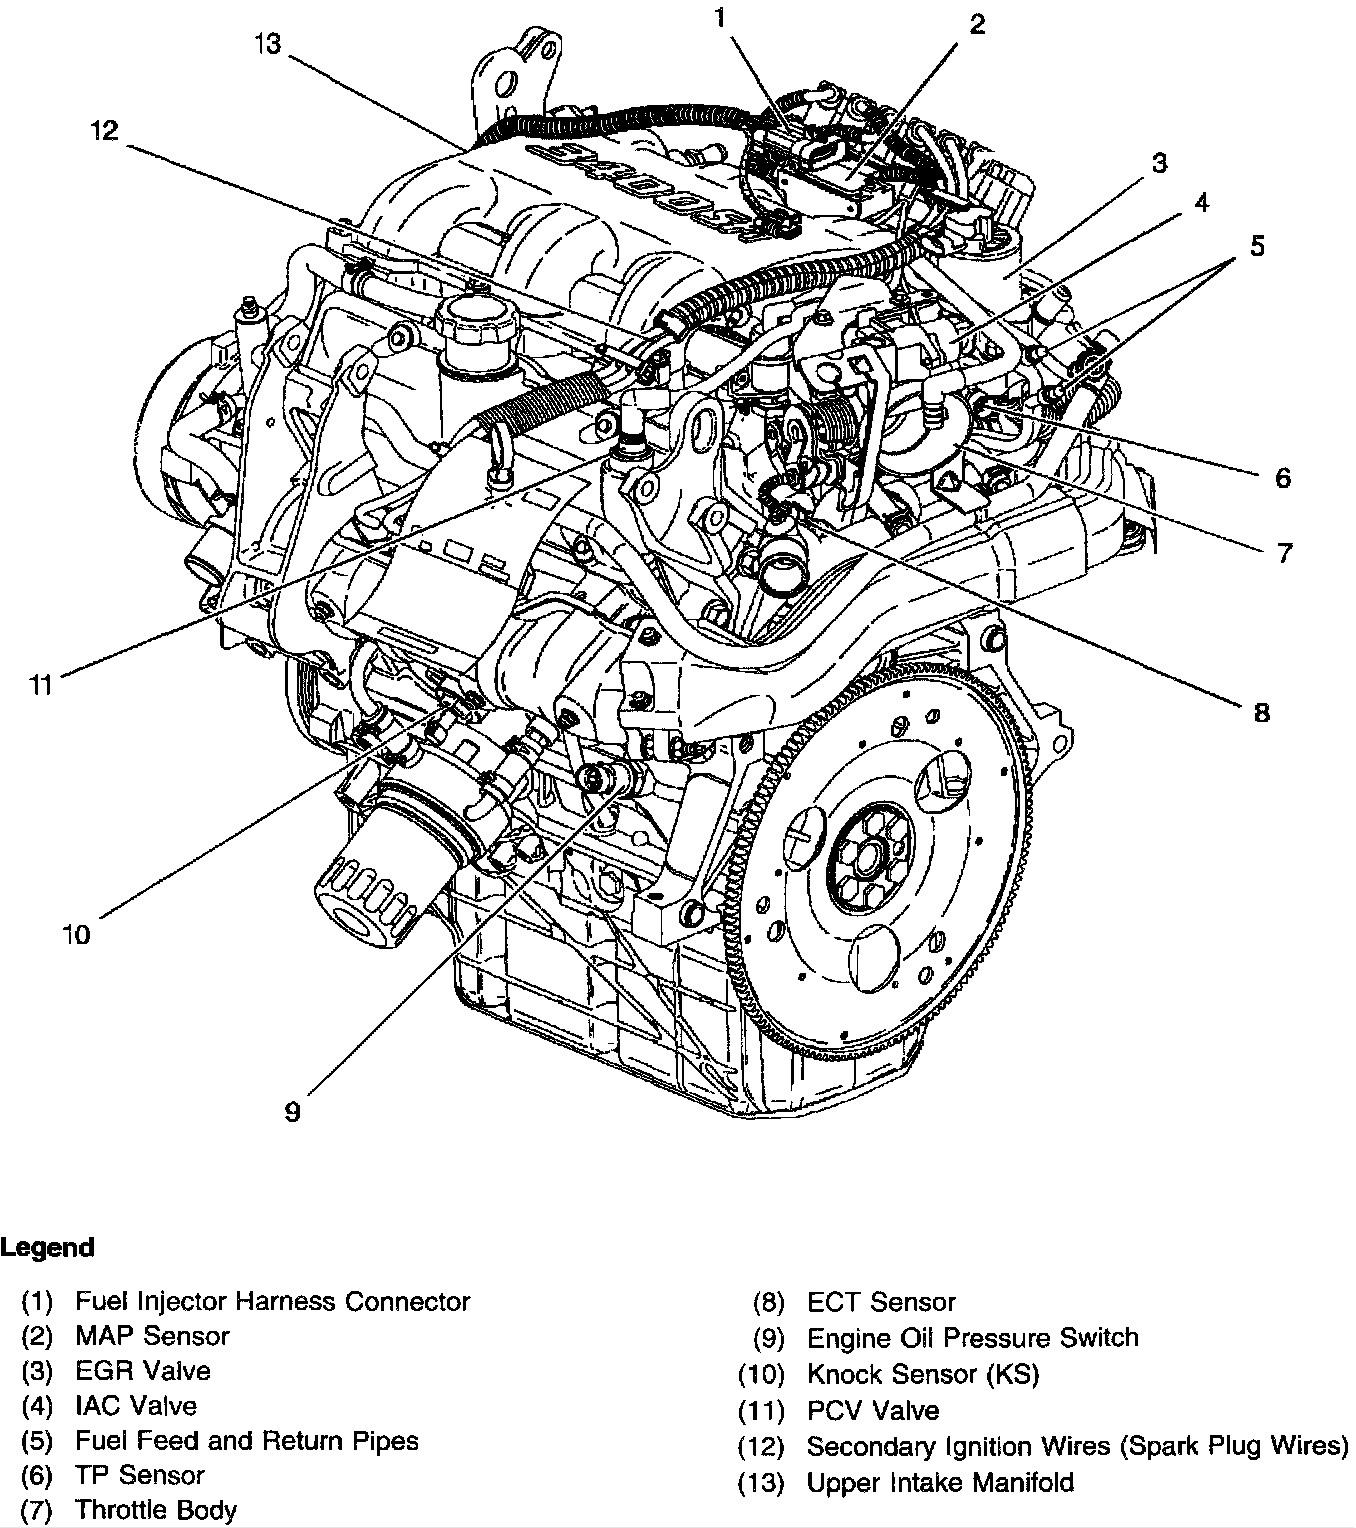 Chevy V6 Vortec Engine Diagram | Wiring Library - Spark Plug Wiring Diagram Chevy 4.3 V6